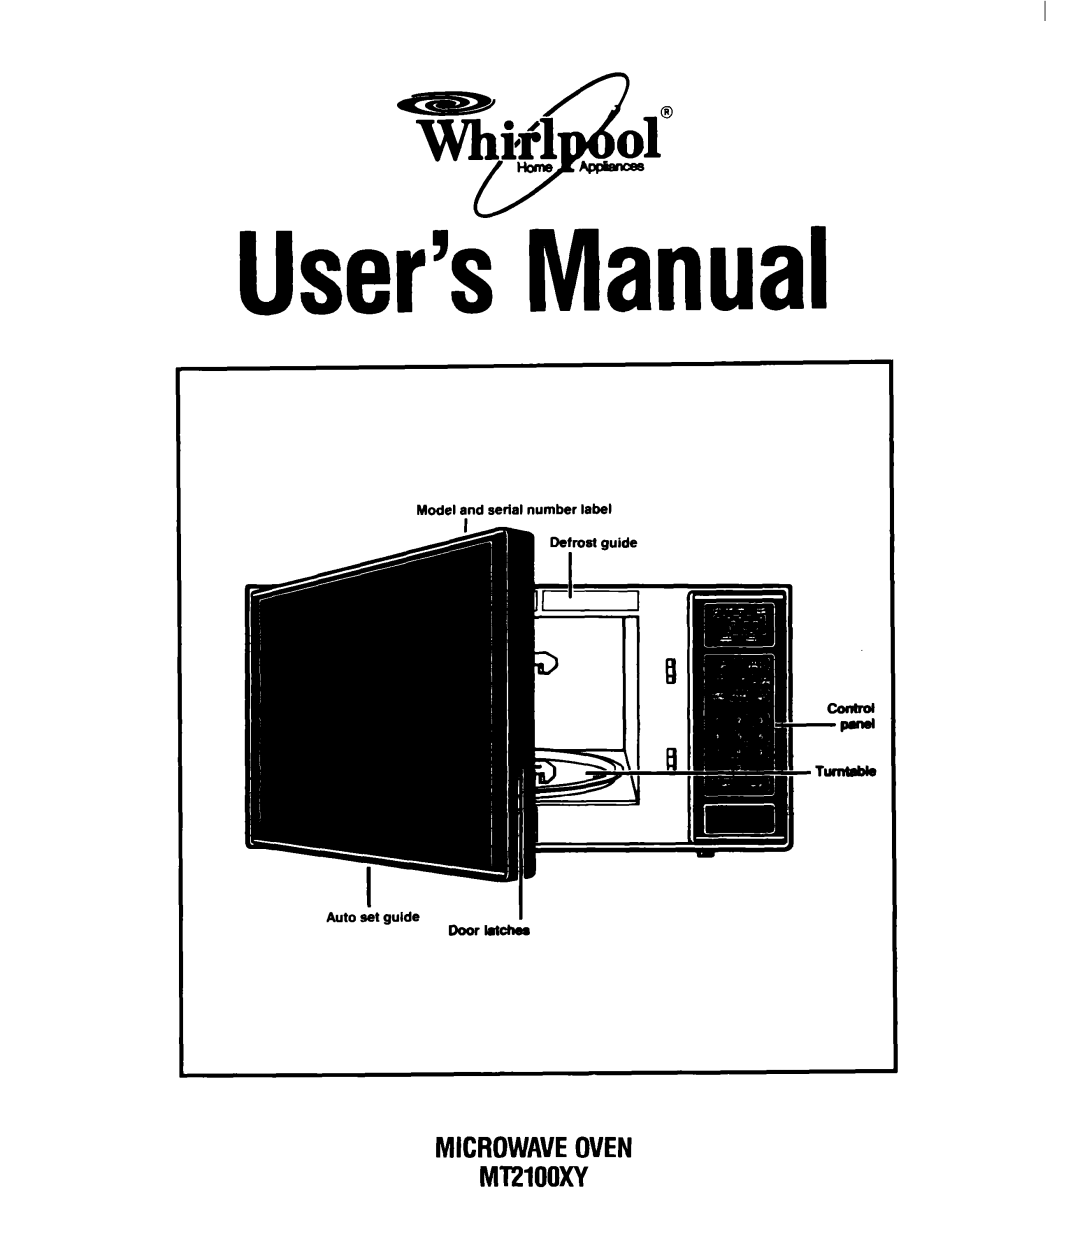 Whirlpool MT2100XY user manual MICROWAVEOVEN Ml2100XY, User’sManual, Doorlatchee 